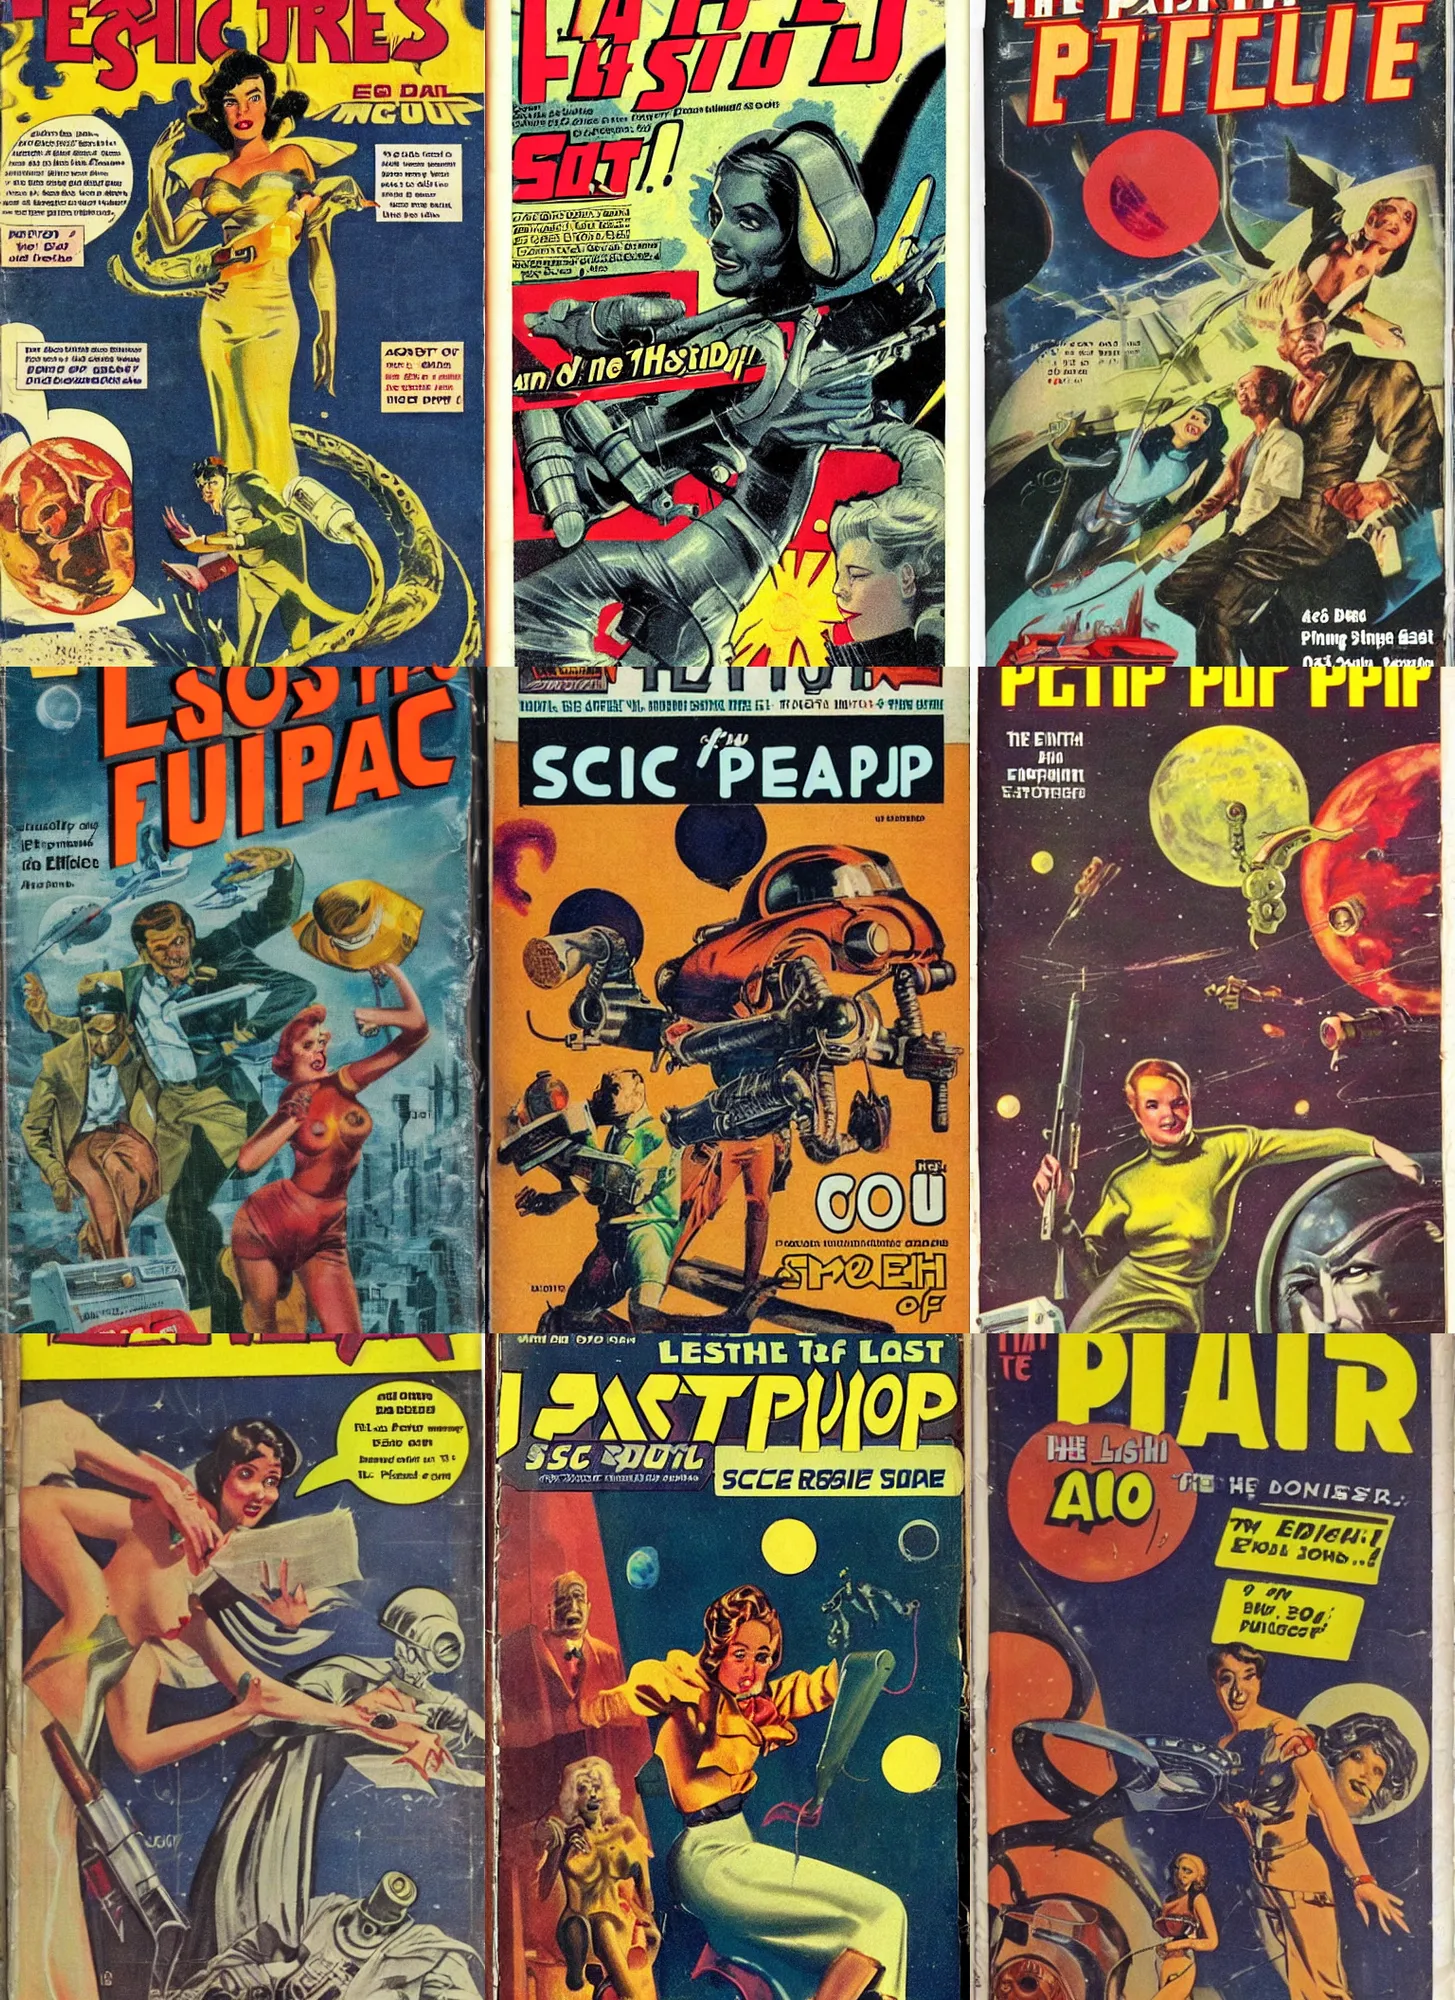 Prompt: retro pulp sci - fi magazine of the last day of earth